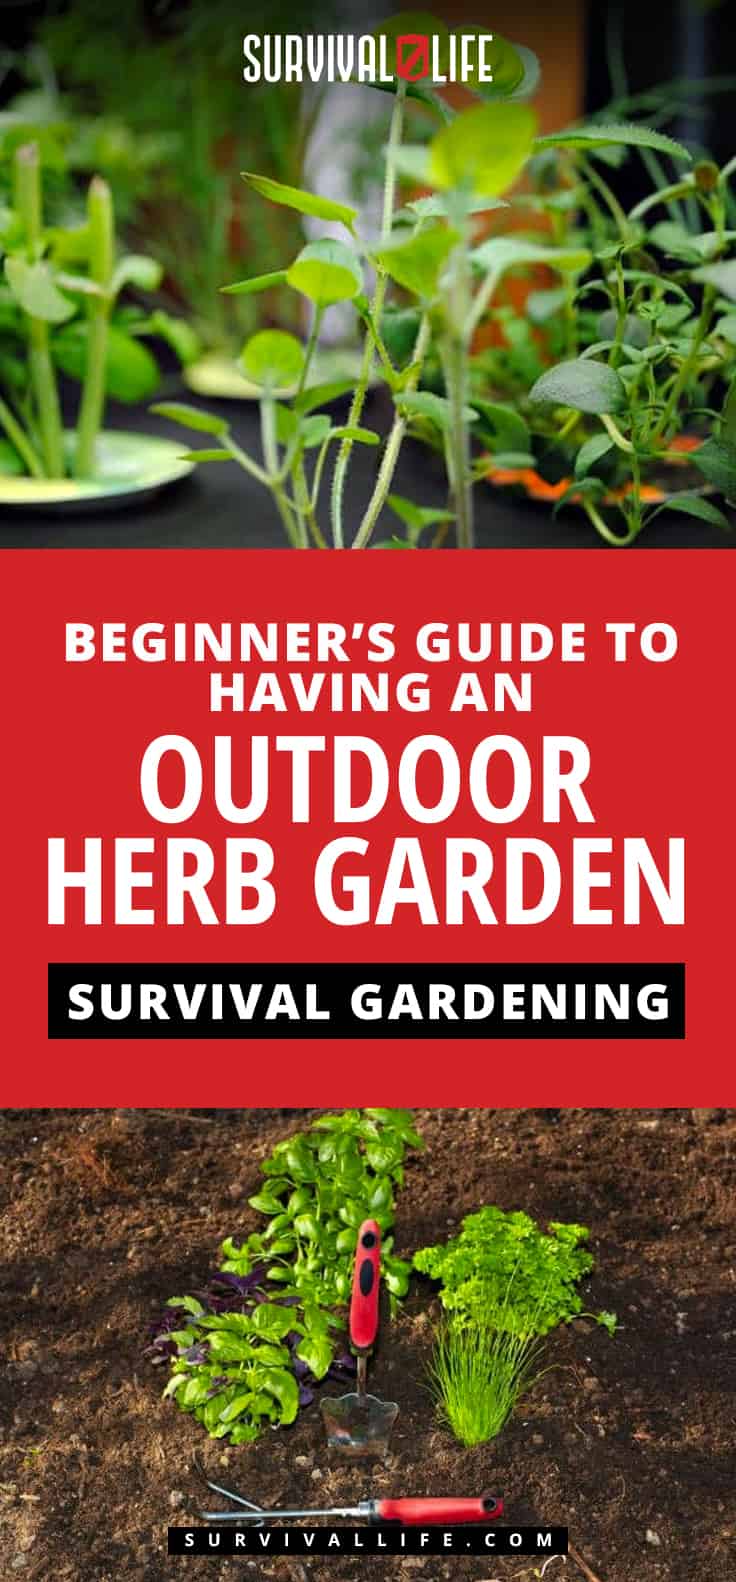 Outdoor Herb Garden | A Beginner’s Guide To Survival Gardening | https://survivallife.com/survival-gardening-outdoor-herb-garden/